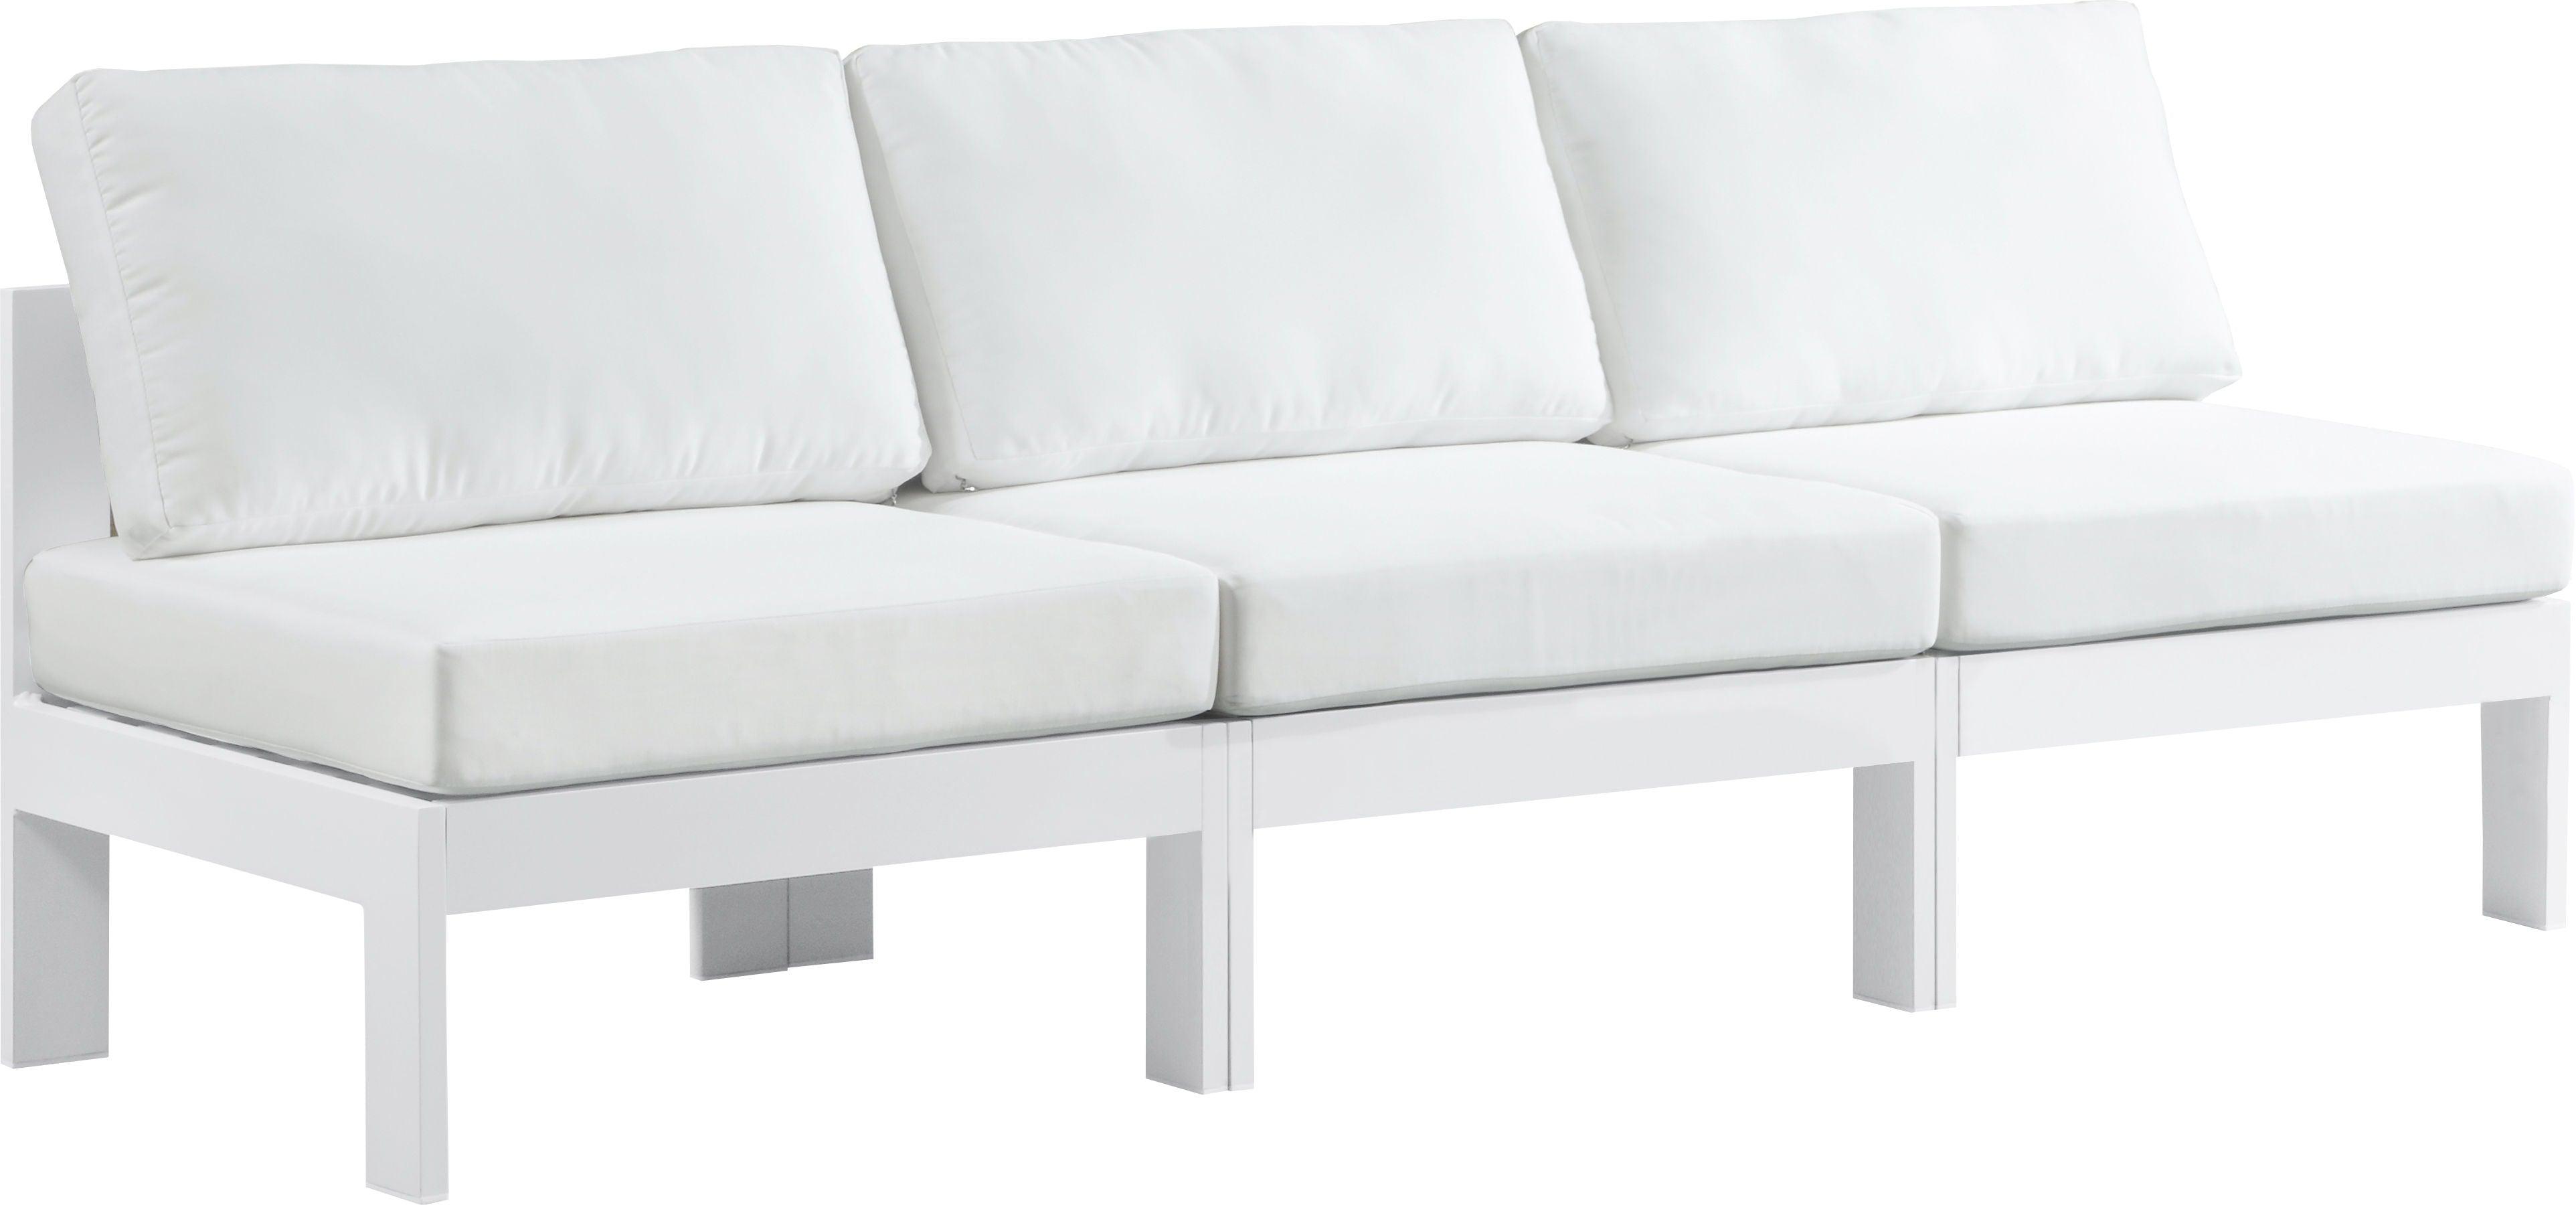 Meridian Furniture - Nizuc - Outdoor Patio Modular Sofa - White - Fabric - Modern & Contemporary - 5th Avenue Furniture